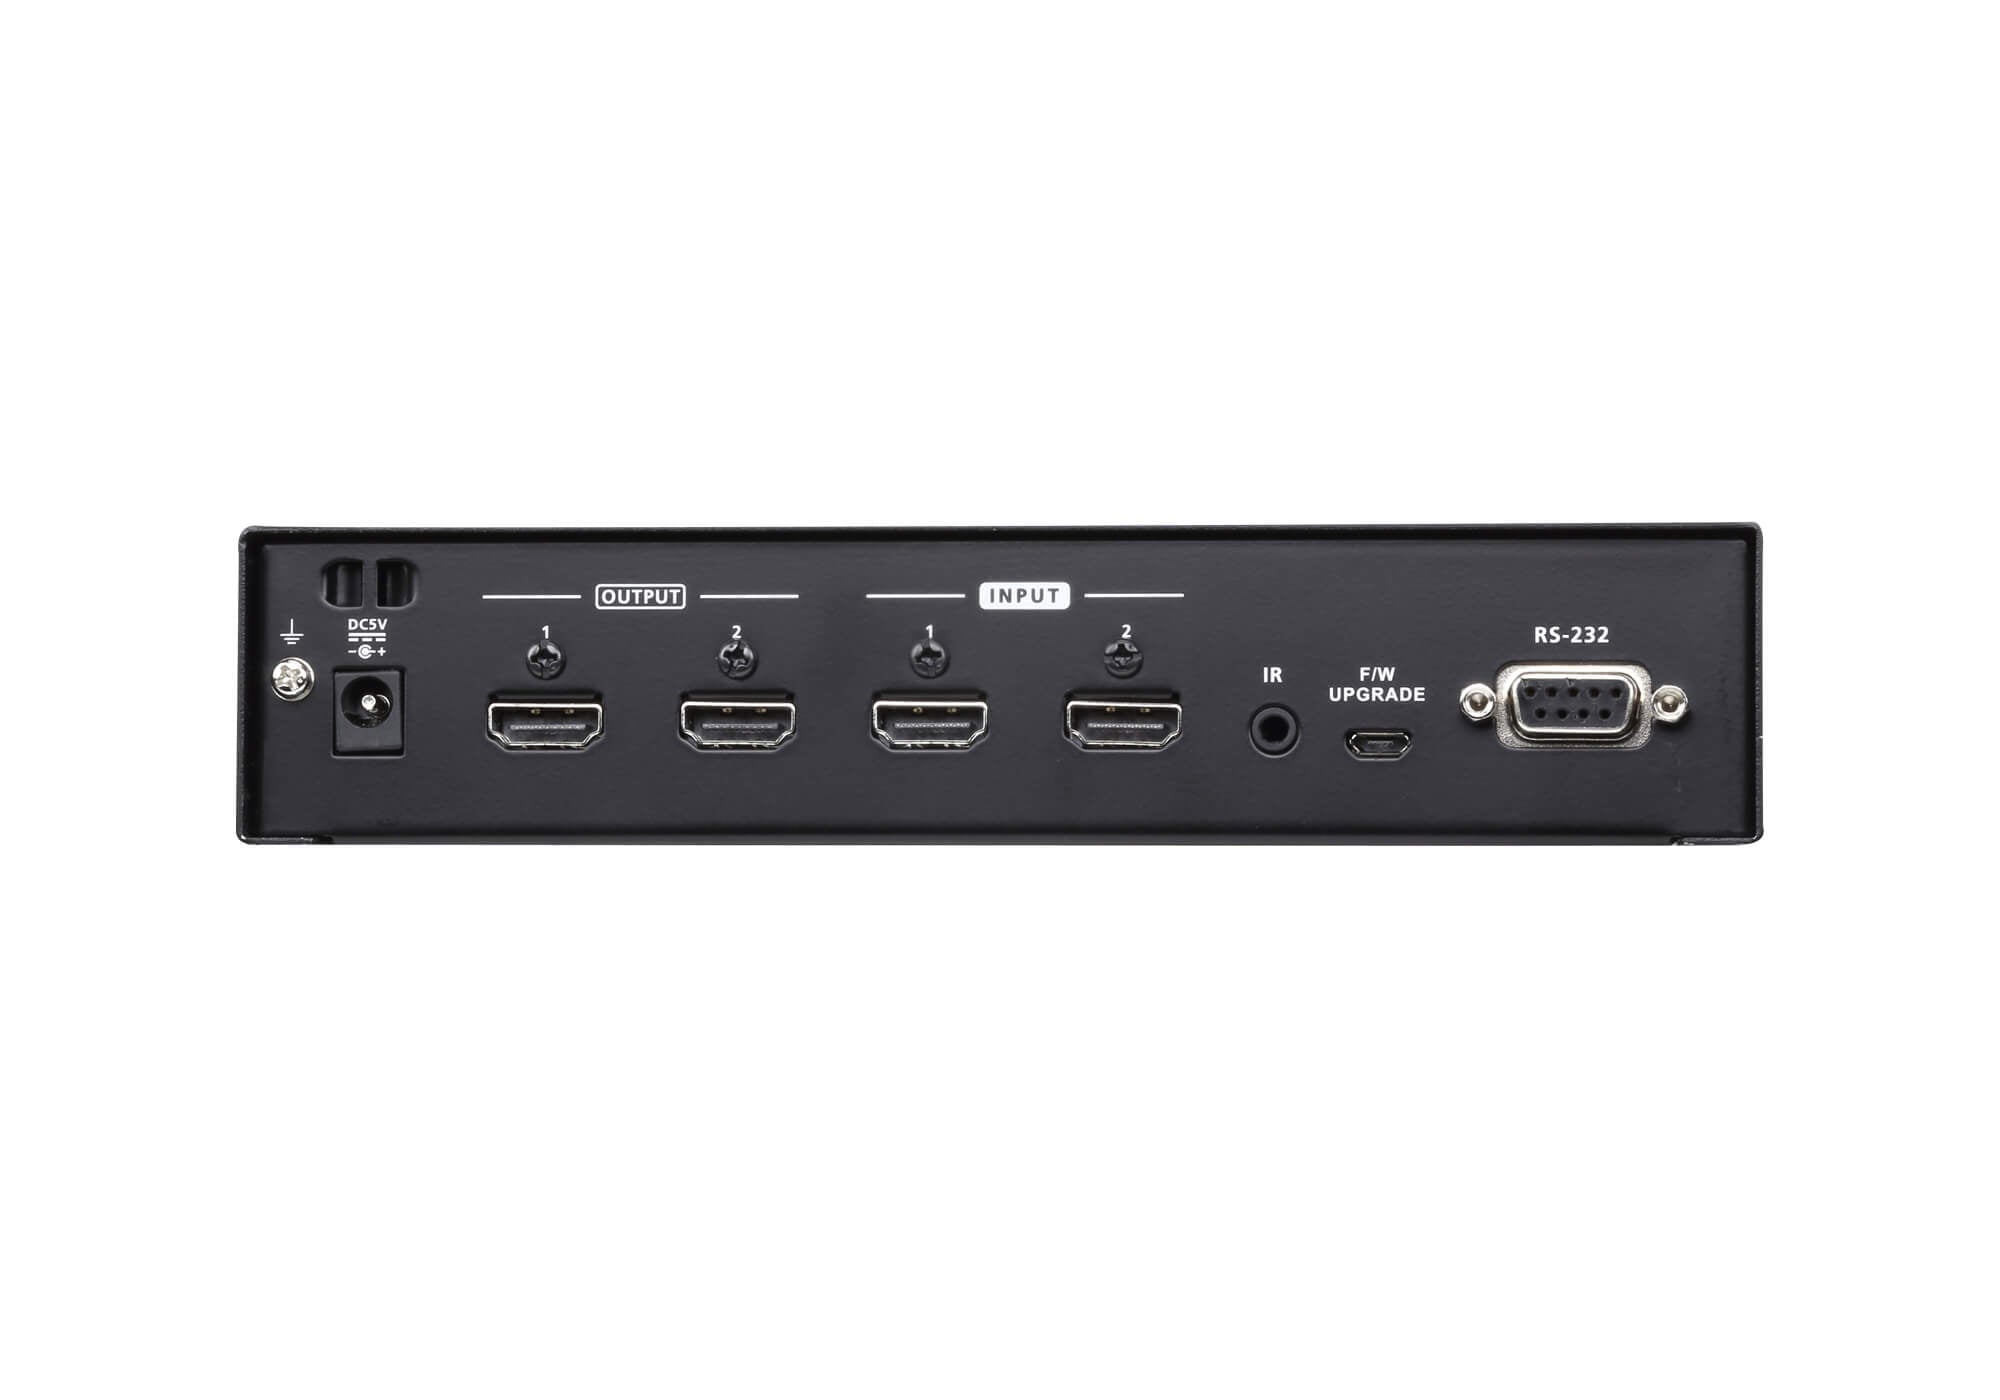 Aten 2x2 4K HDMI Matrix Switch -VM0202H (3 Year Manufacture Local Warranty In Singapore)